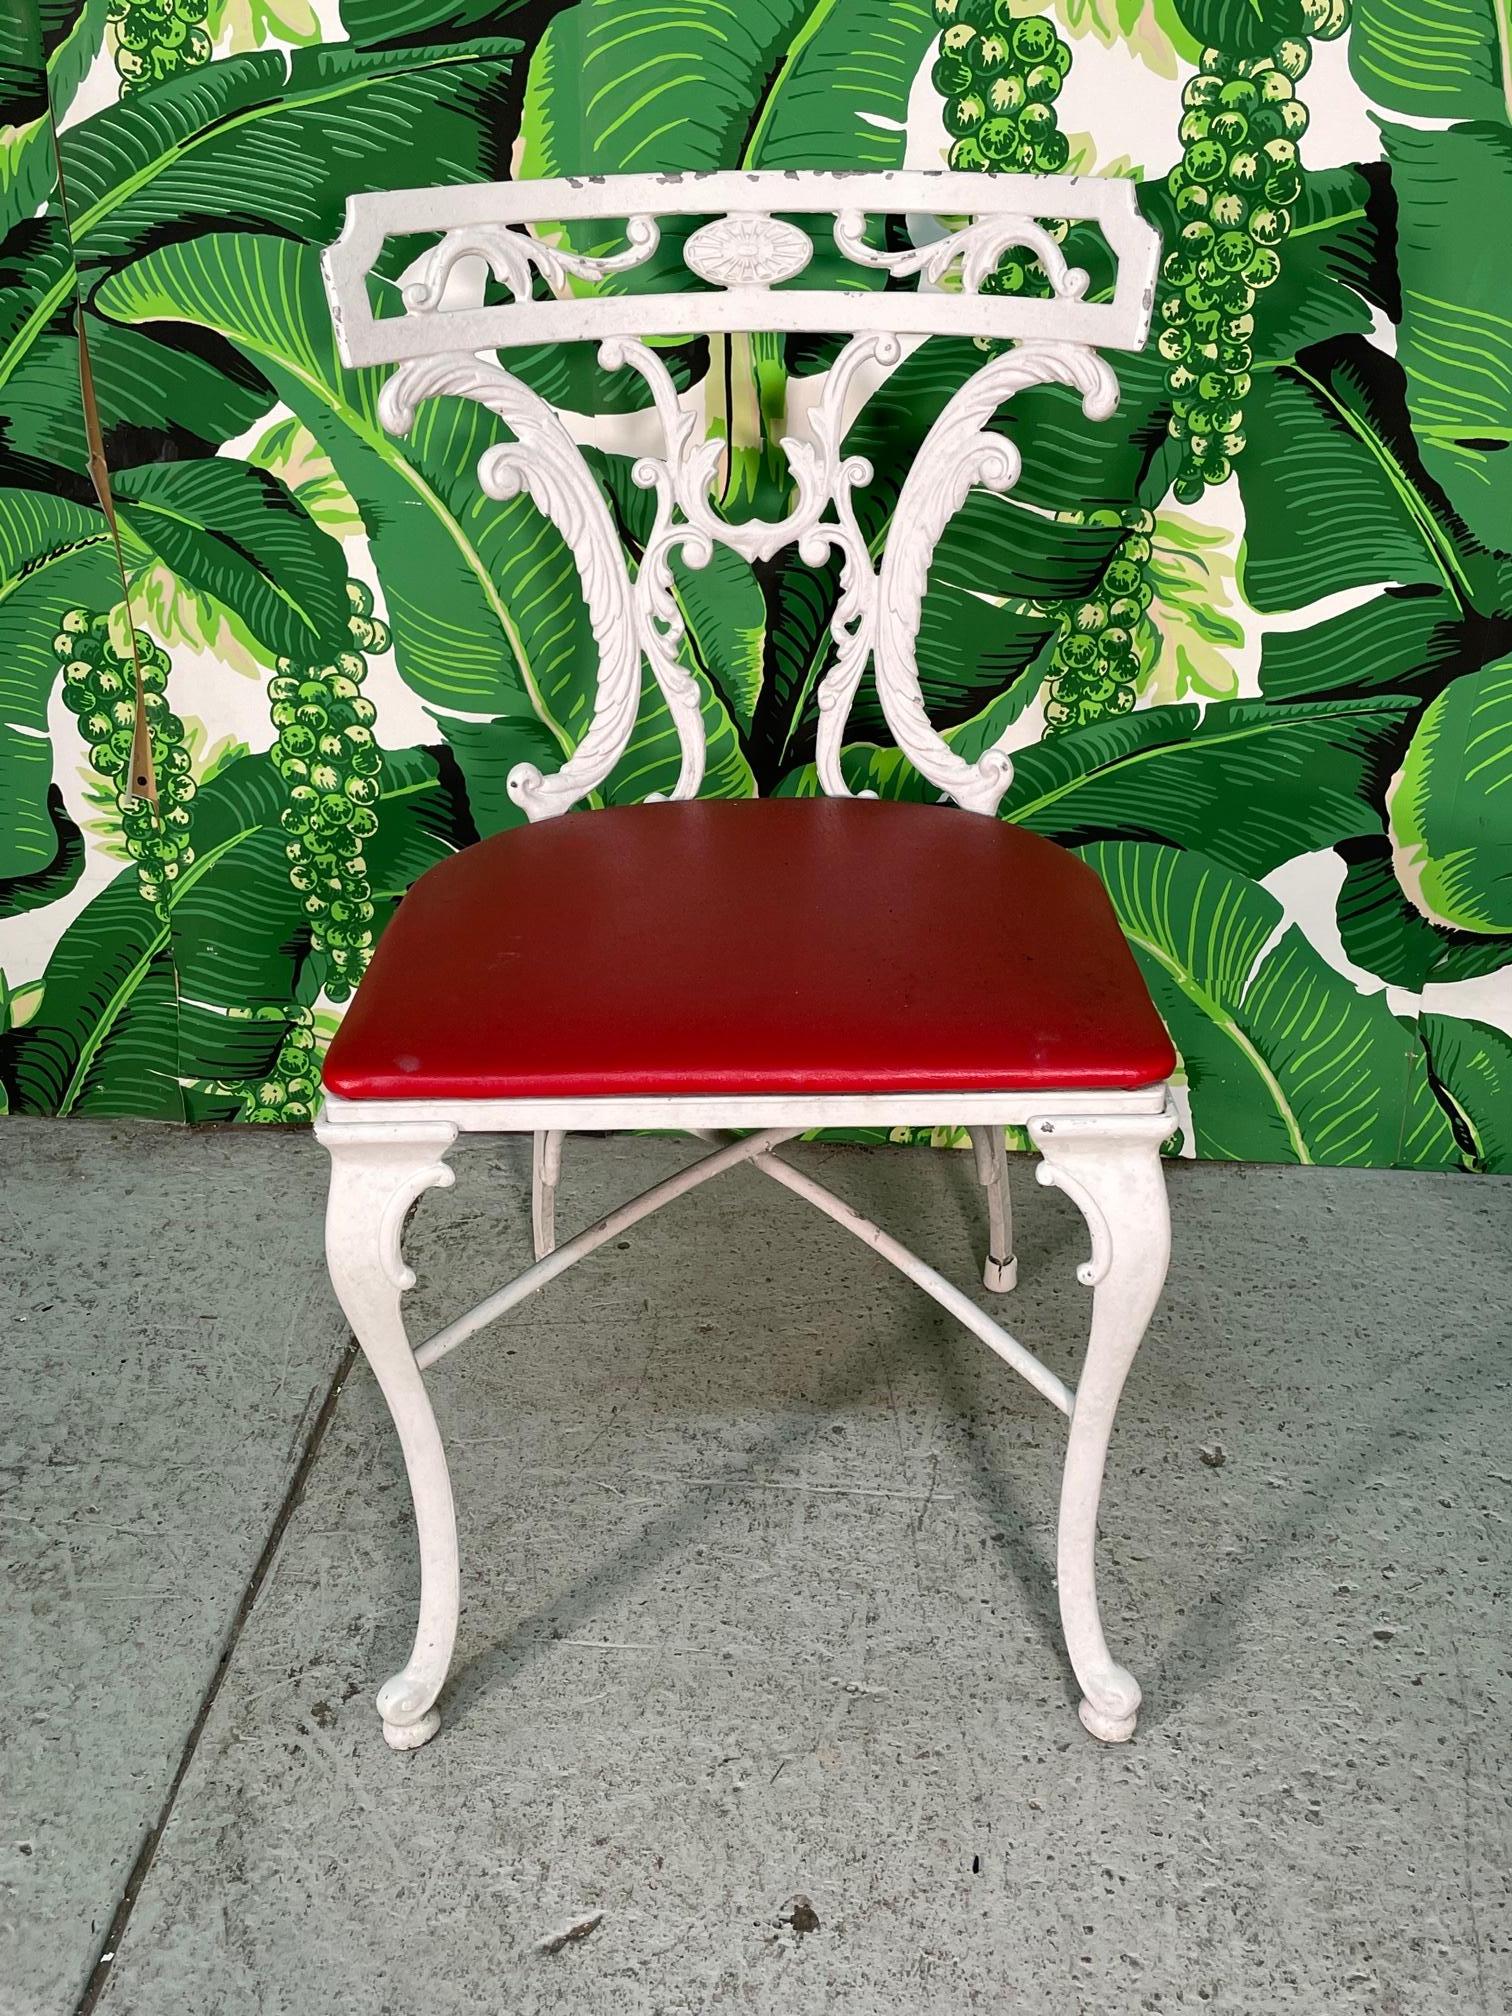 Hollywood Regency Klismos Garden Chairs 1950s Cast Aluminum, Set of 6